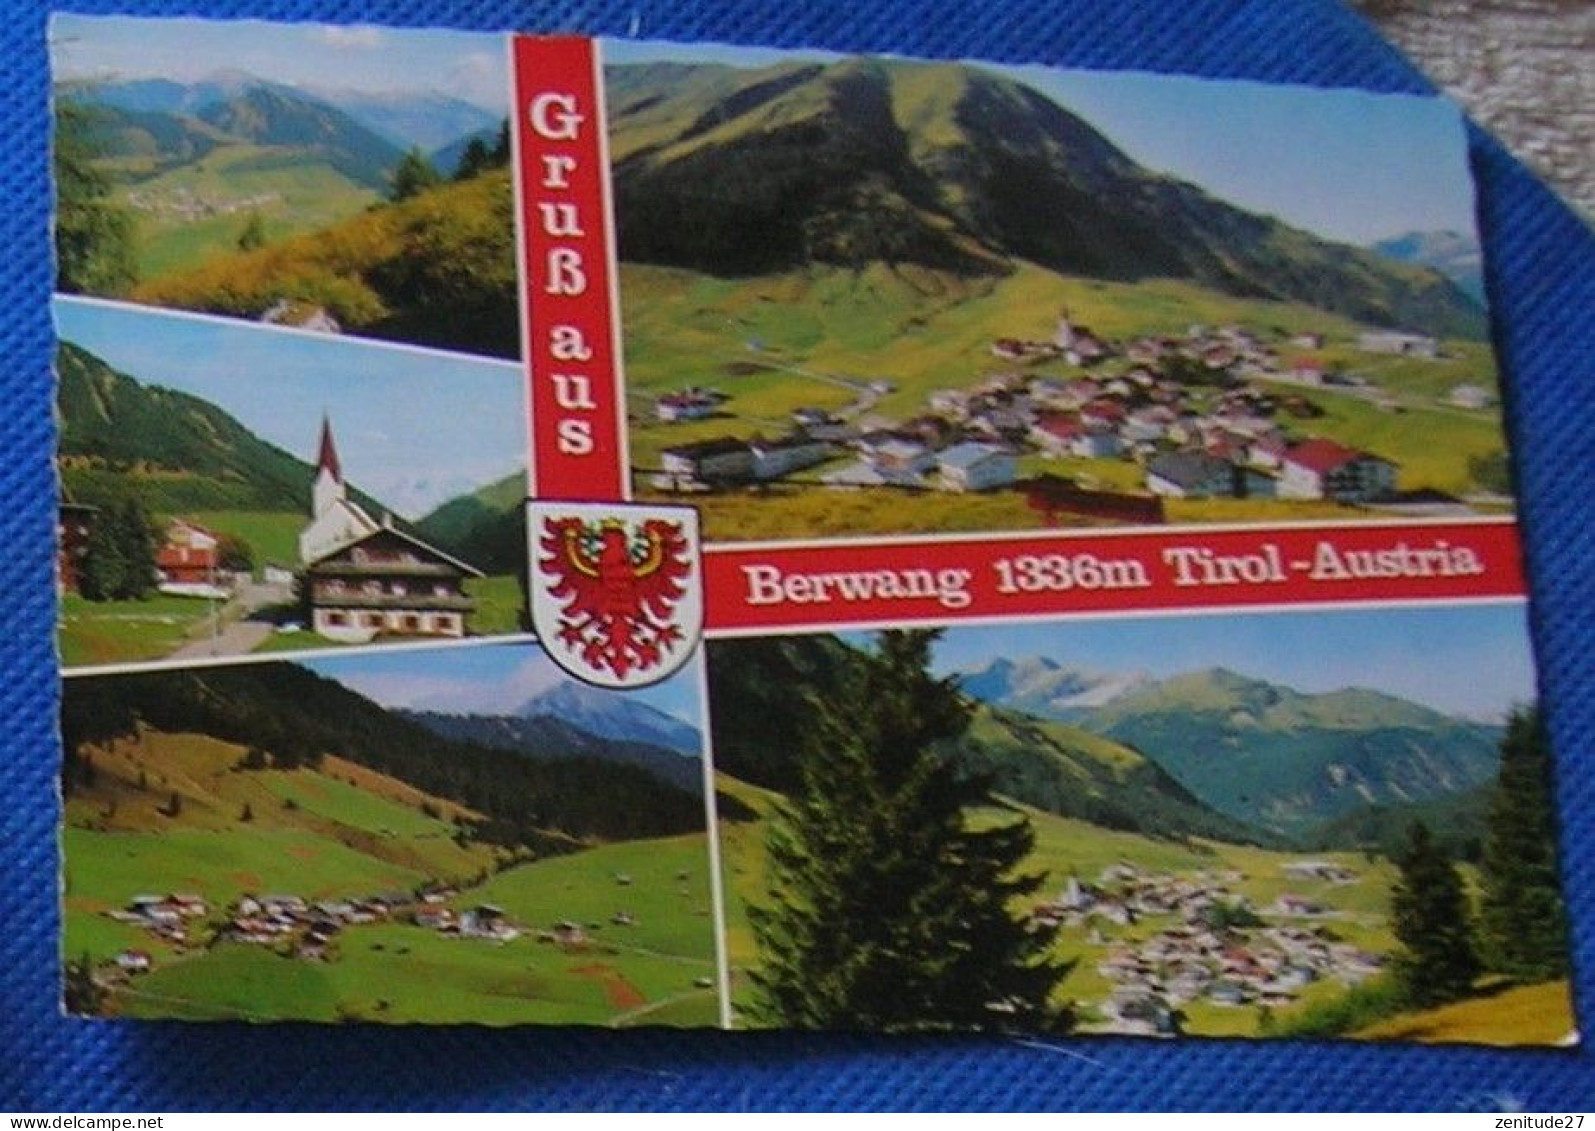 Autriche - Gruss Berwang 1336m Tirol Austria - Multi Vue - Berwang